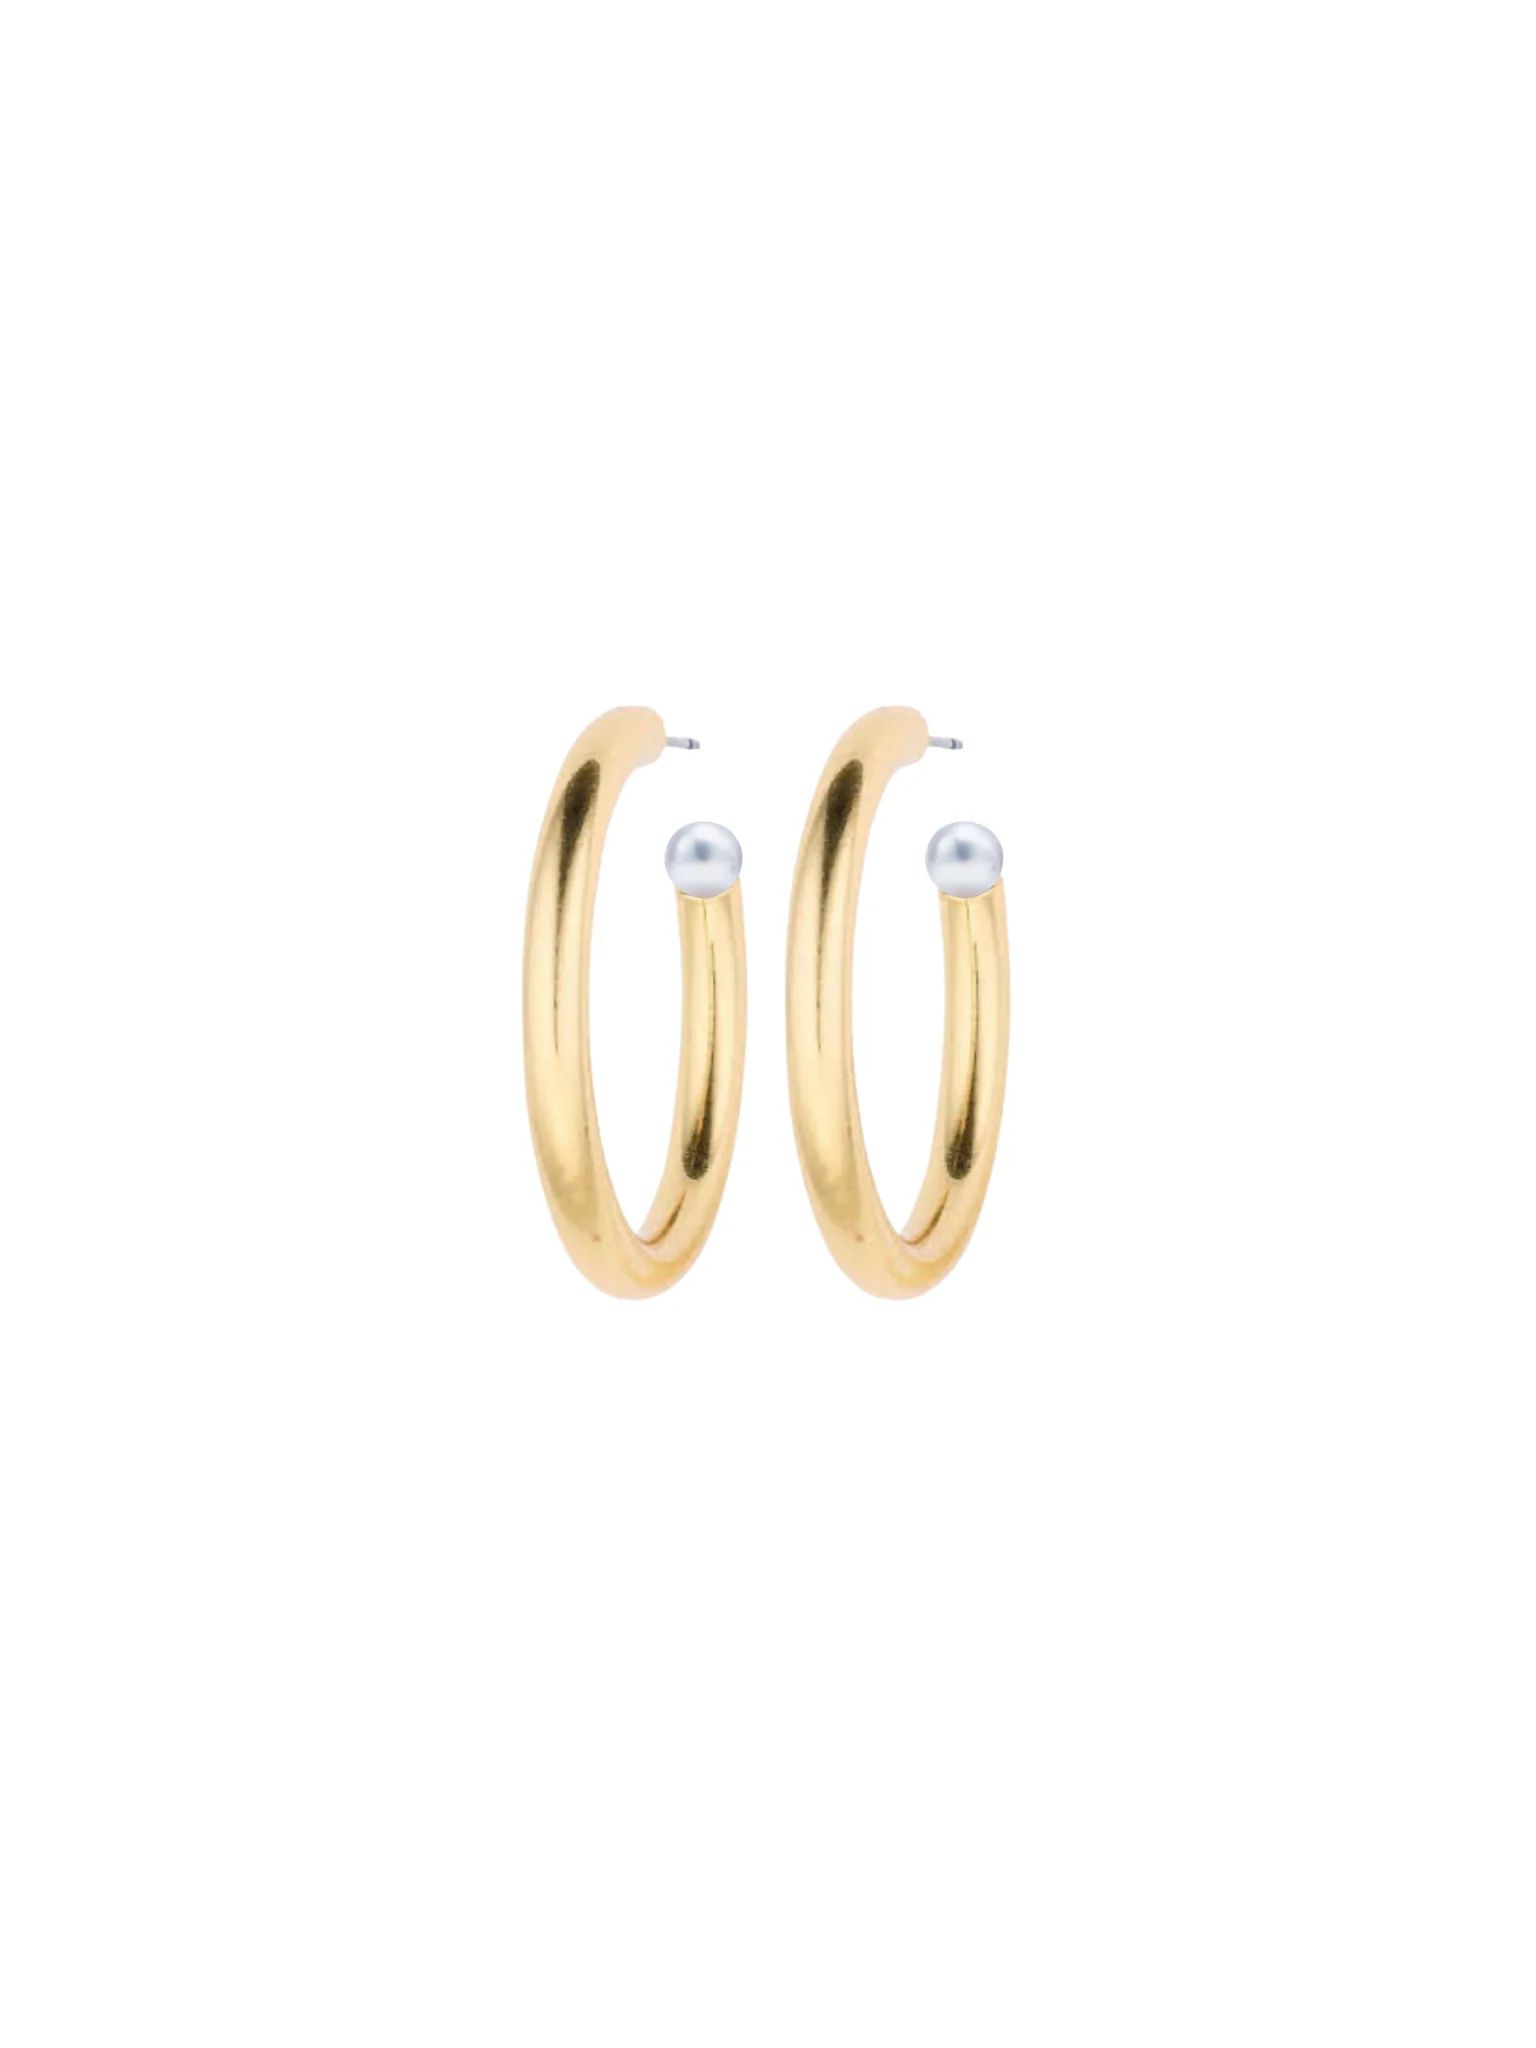 Chunky golden hoops + pearl | Nicola Bathie Jewelry